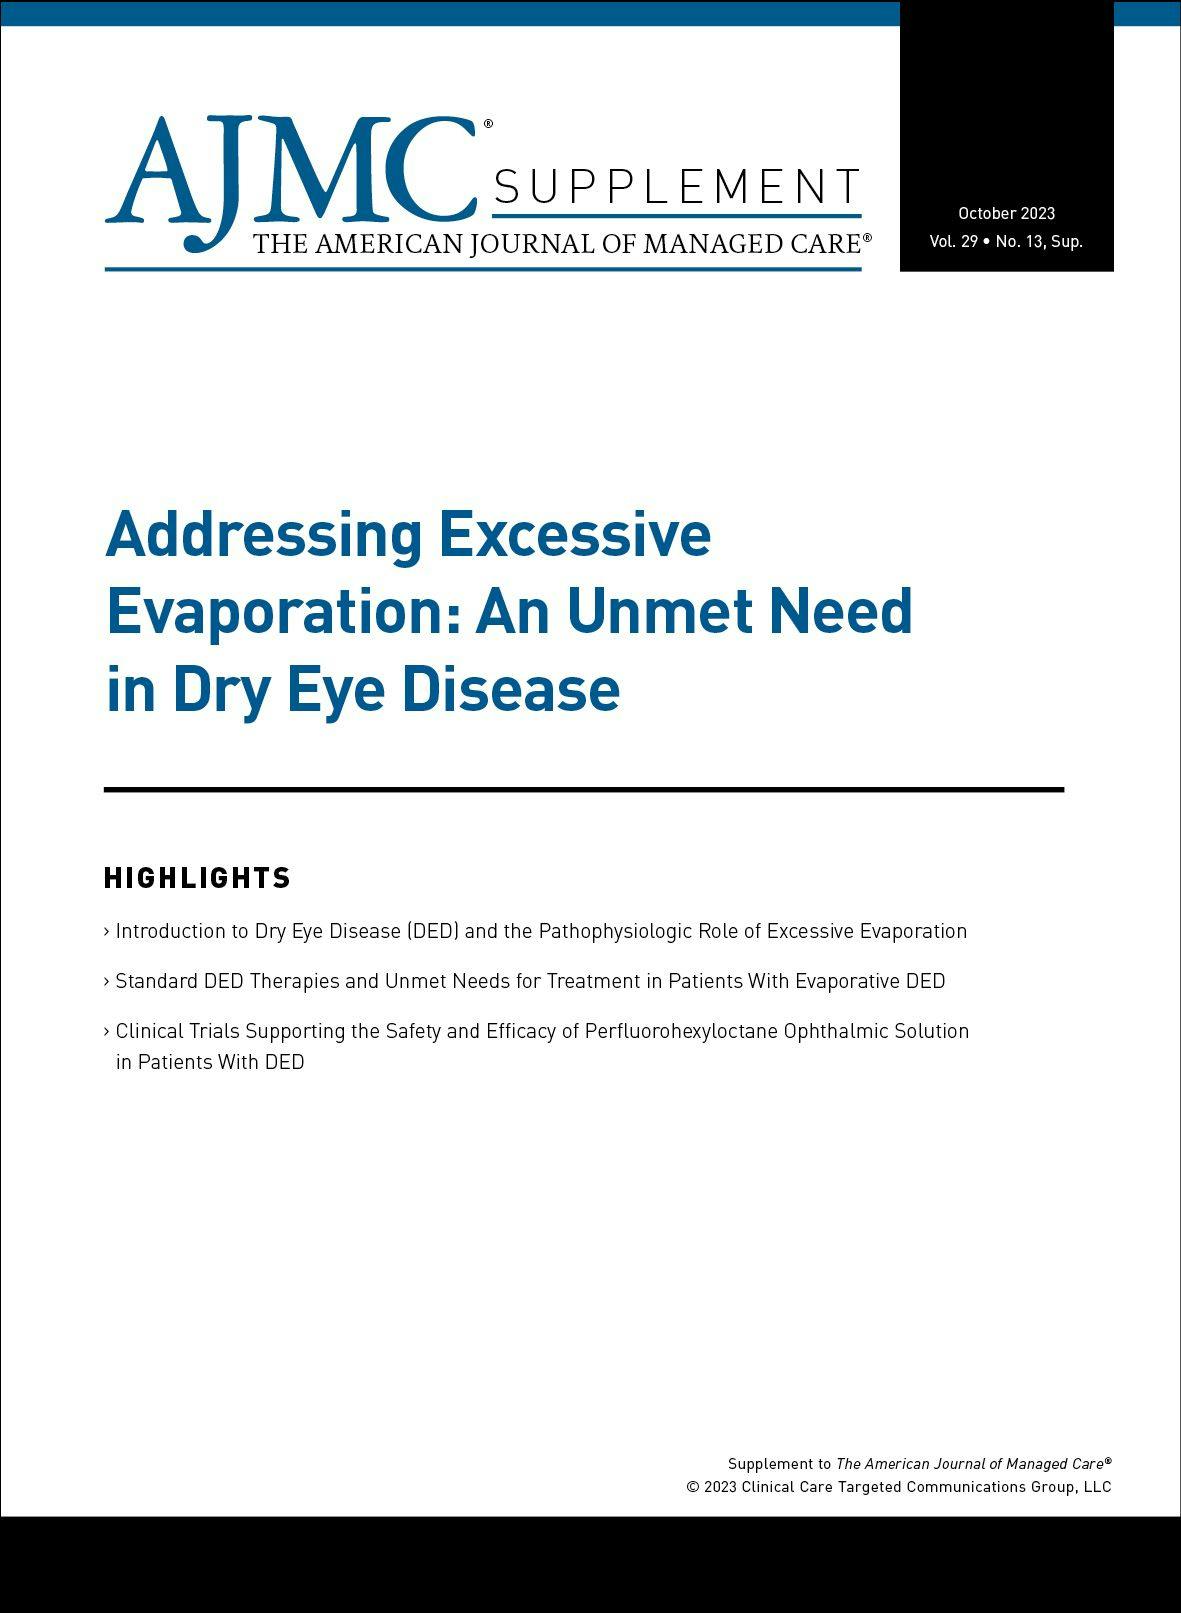 Addressing Excessive Evaporation: An Unmet Need in Dry Eye Disease